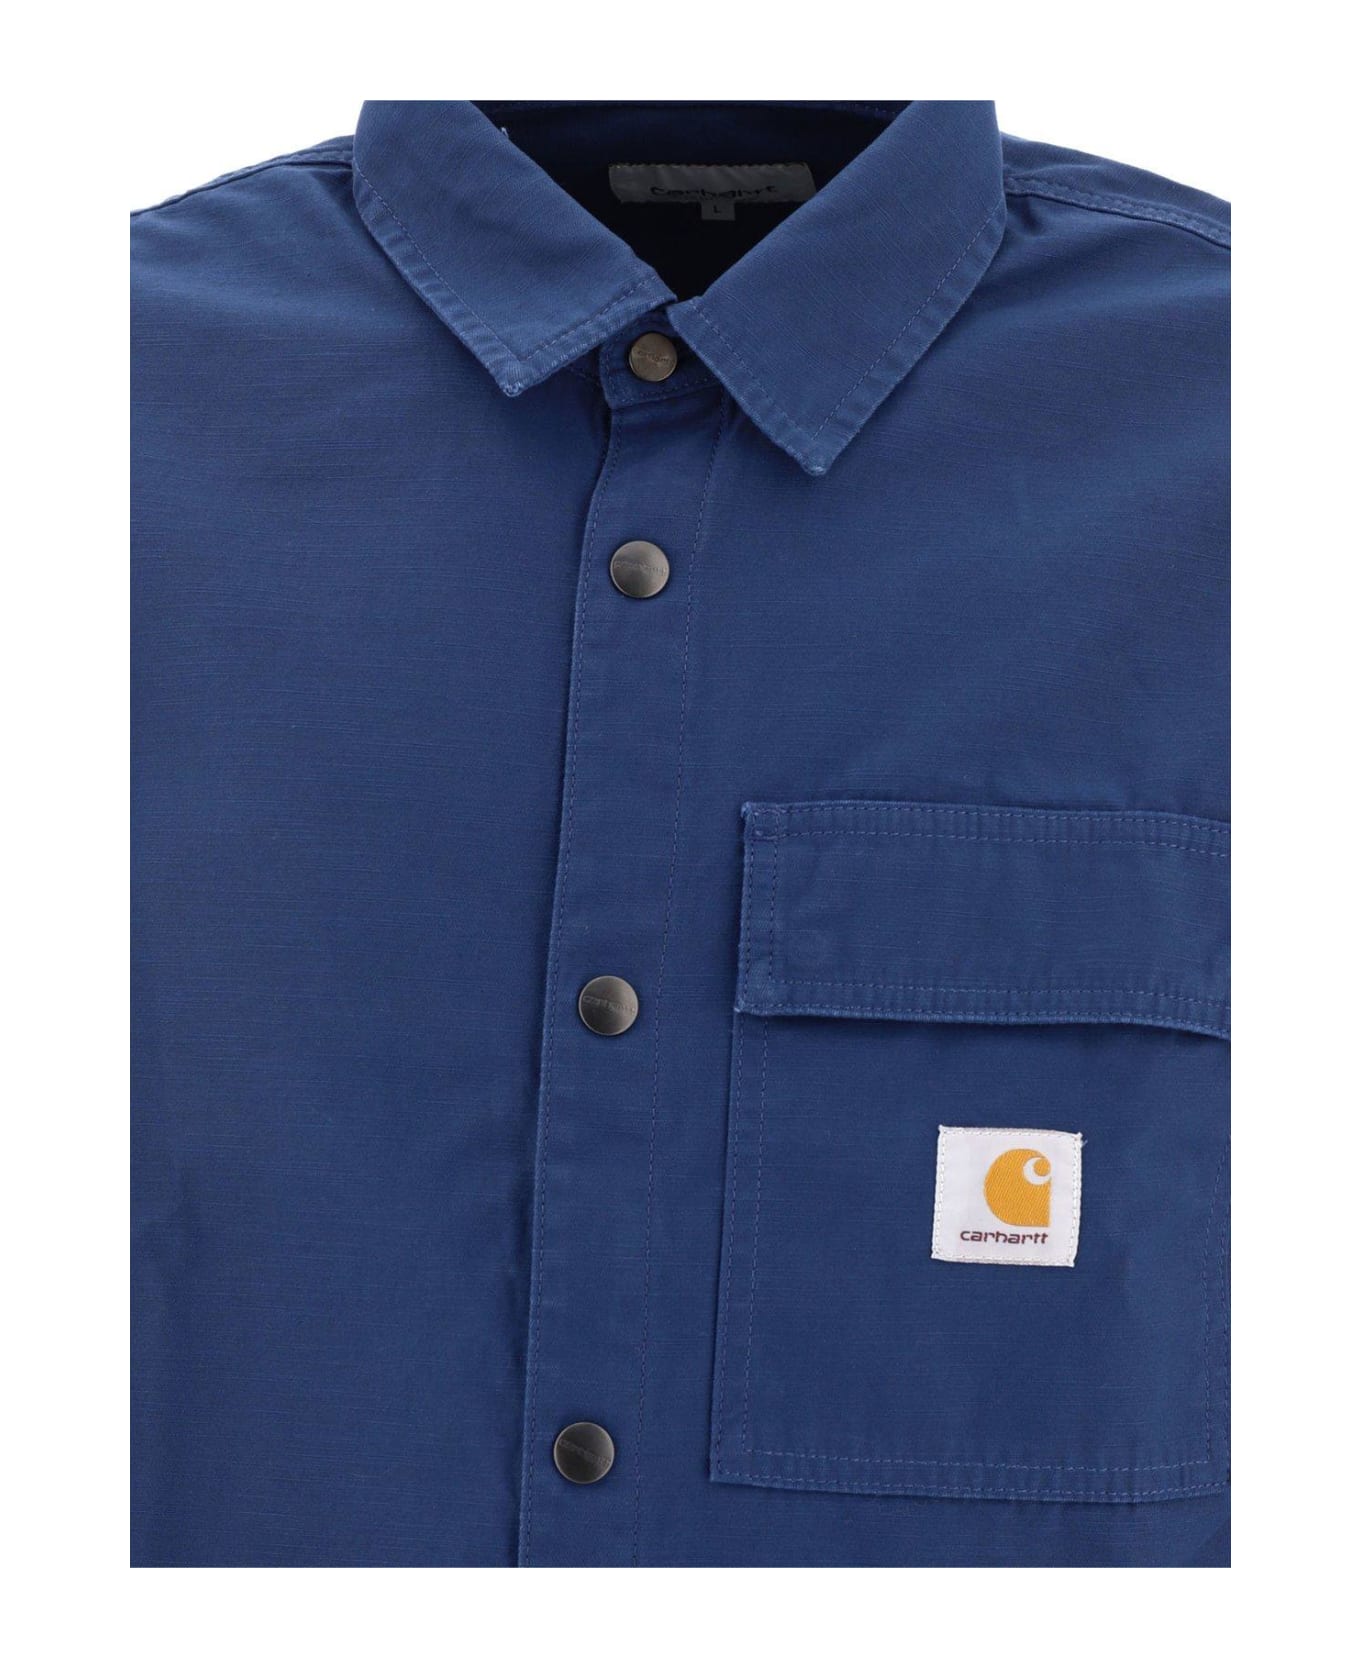 Carhartt Hayworth Shirt Jacket - NAVAL RINSED